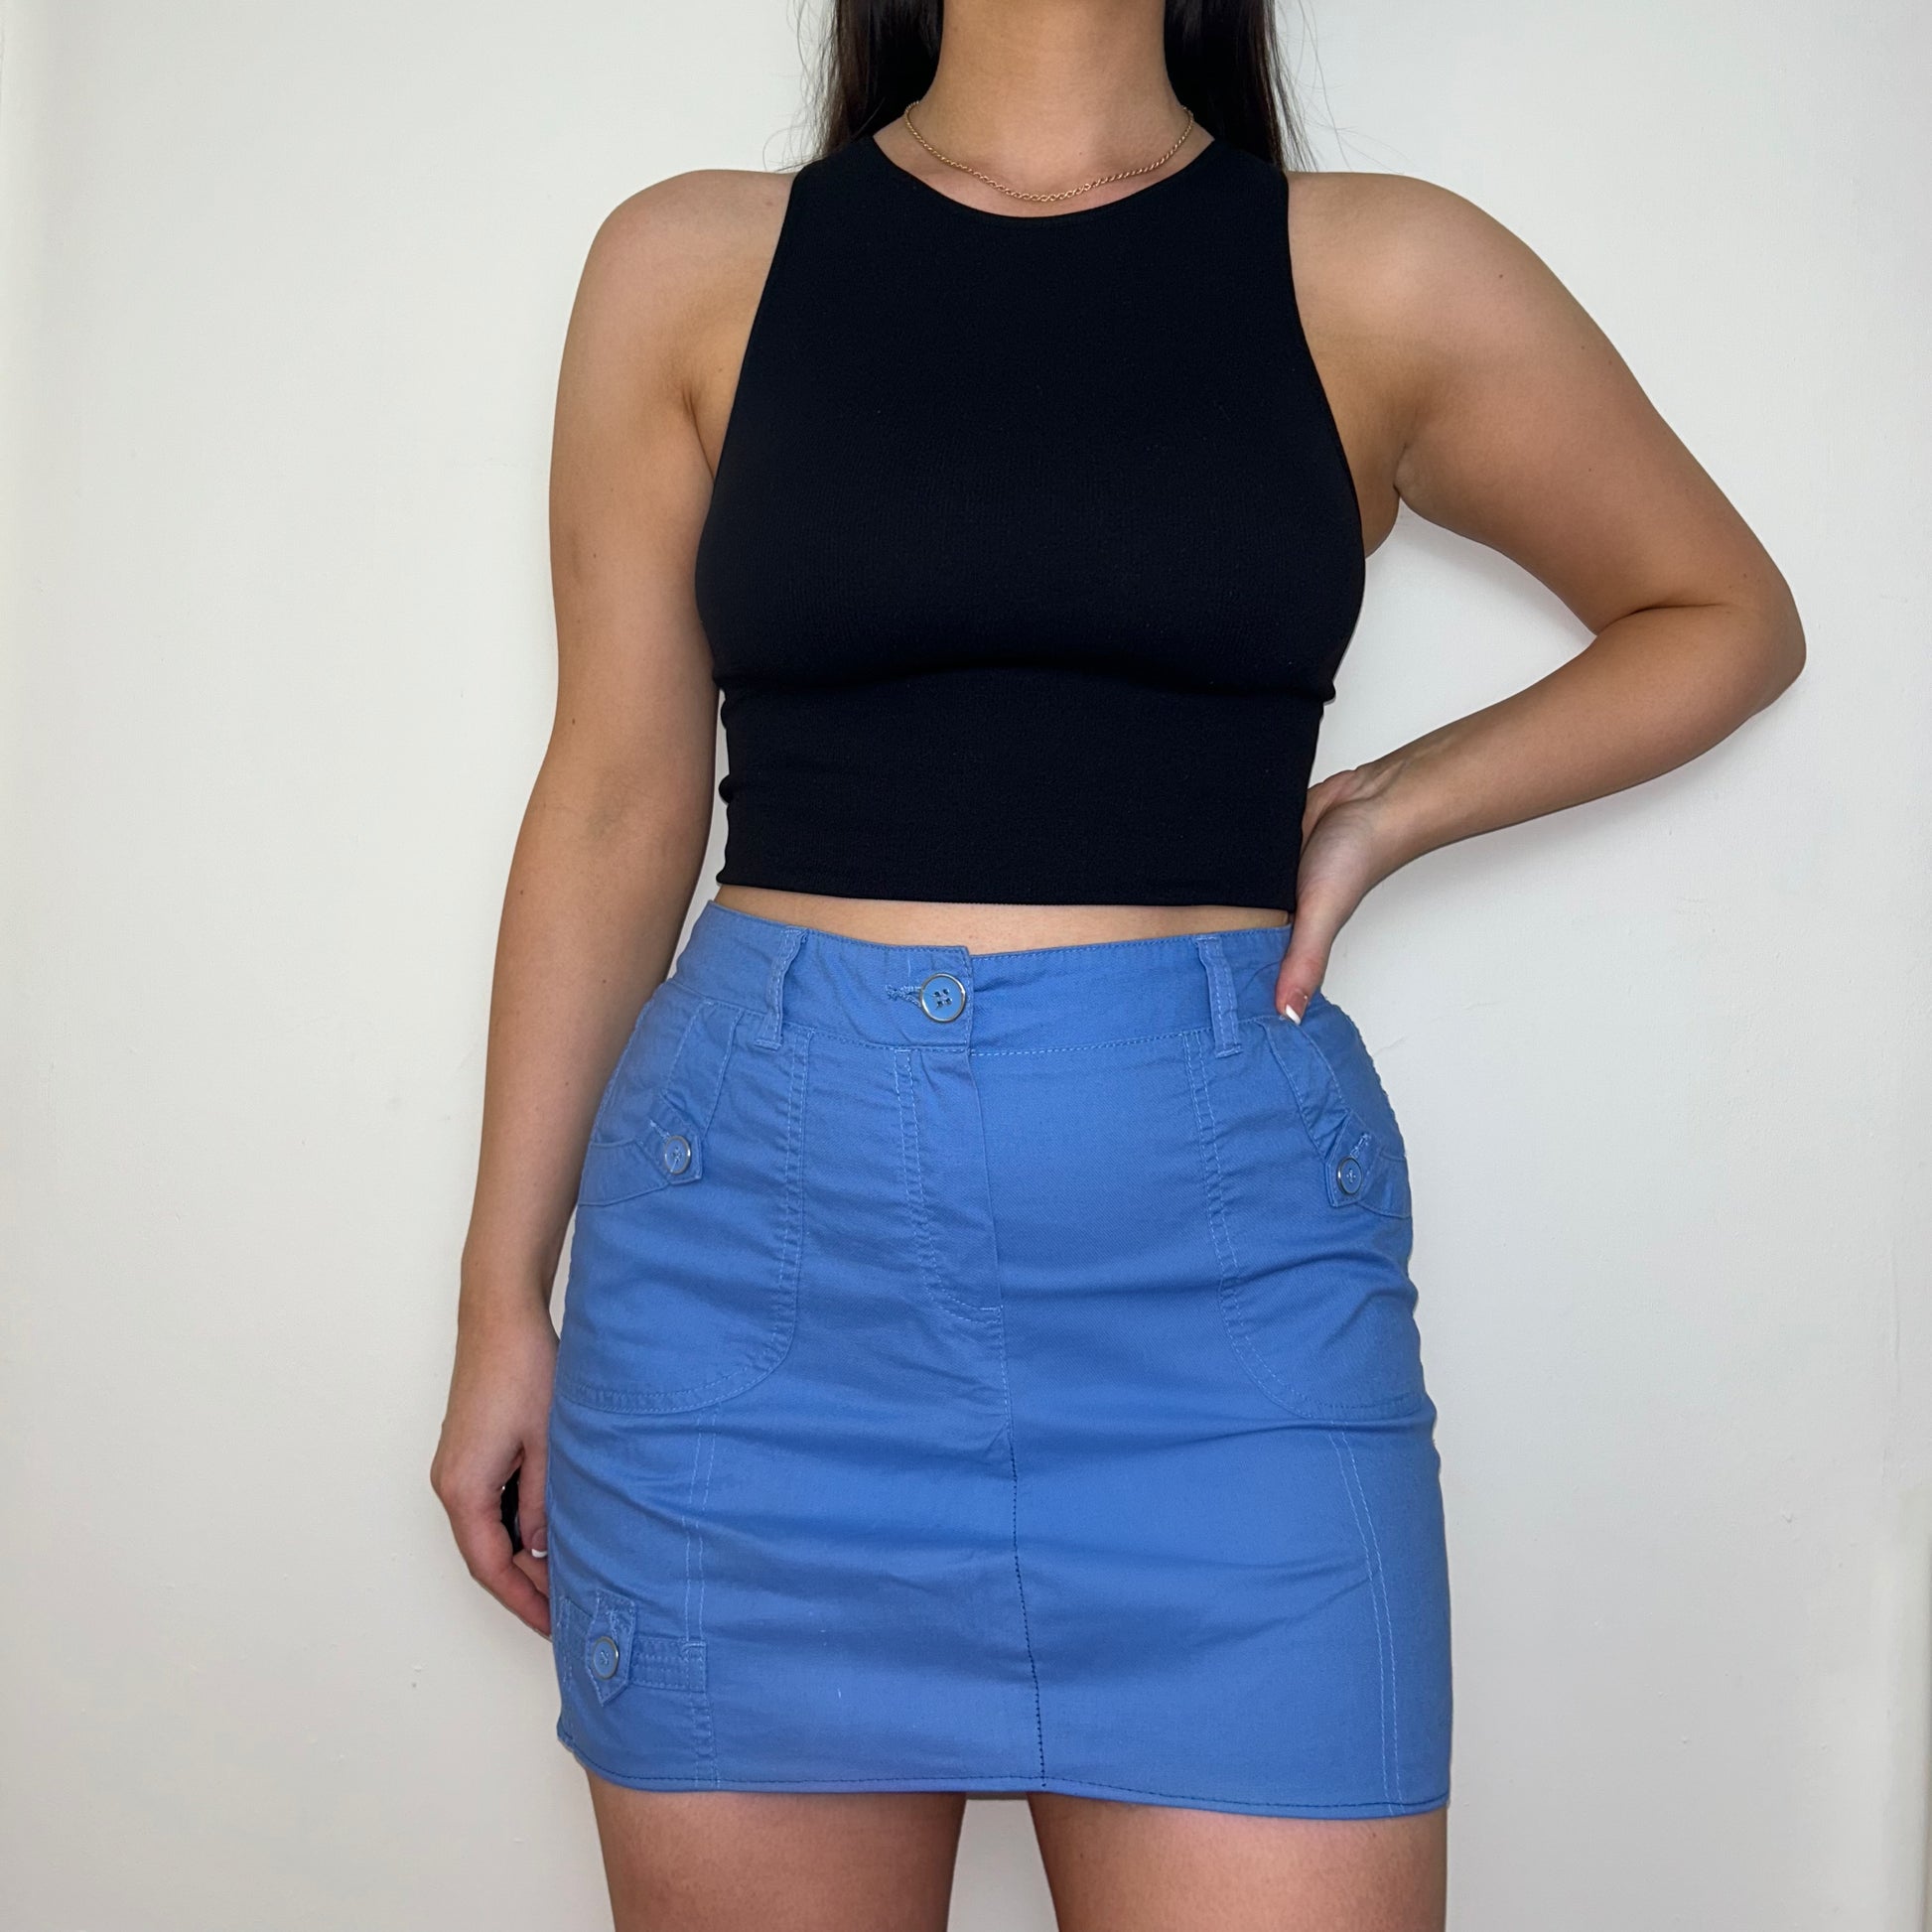 blue mini cargo skirt shown on a model wearing a black sleeveless crop top